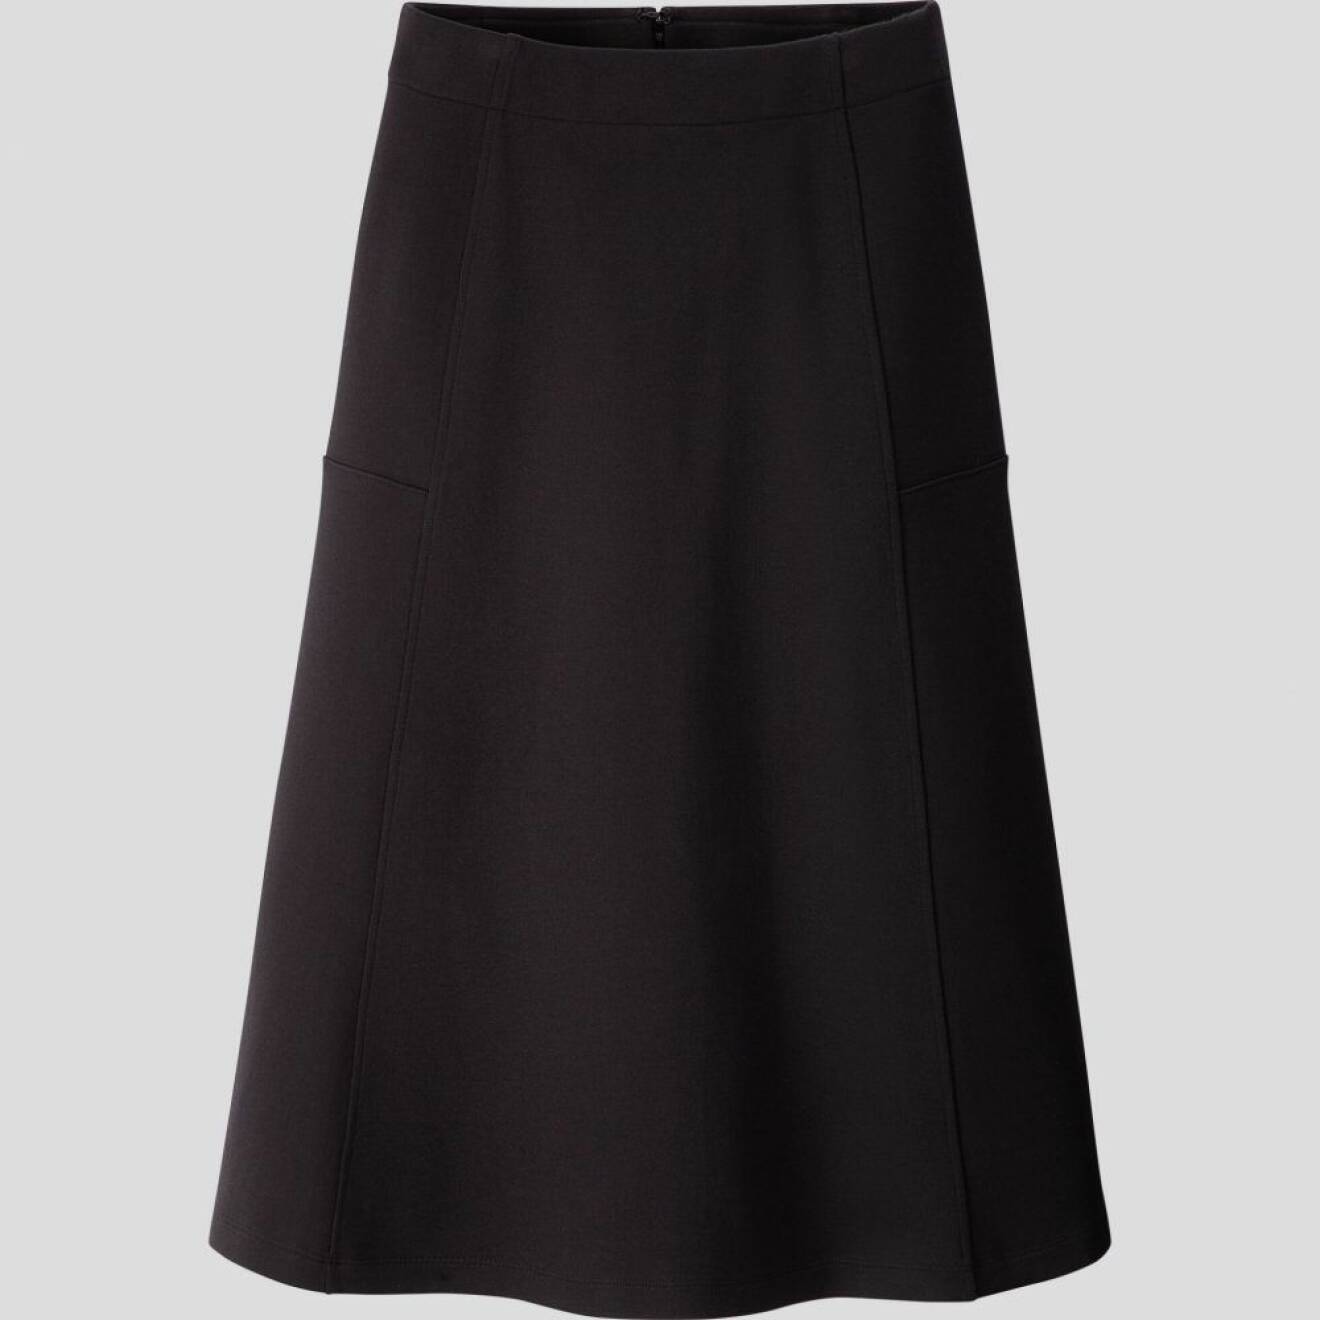 Uniqlo U höstkollektion 2019, svart kjol